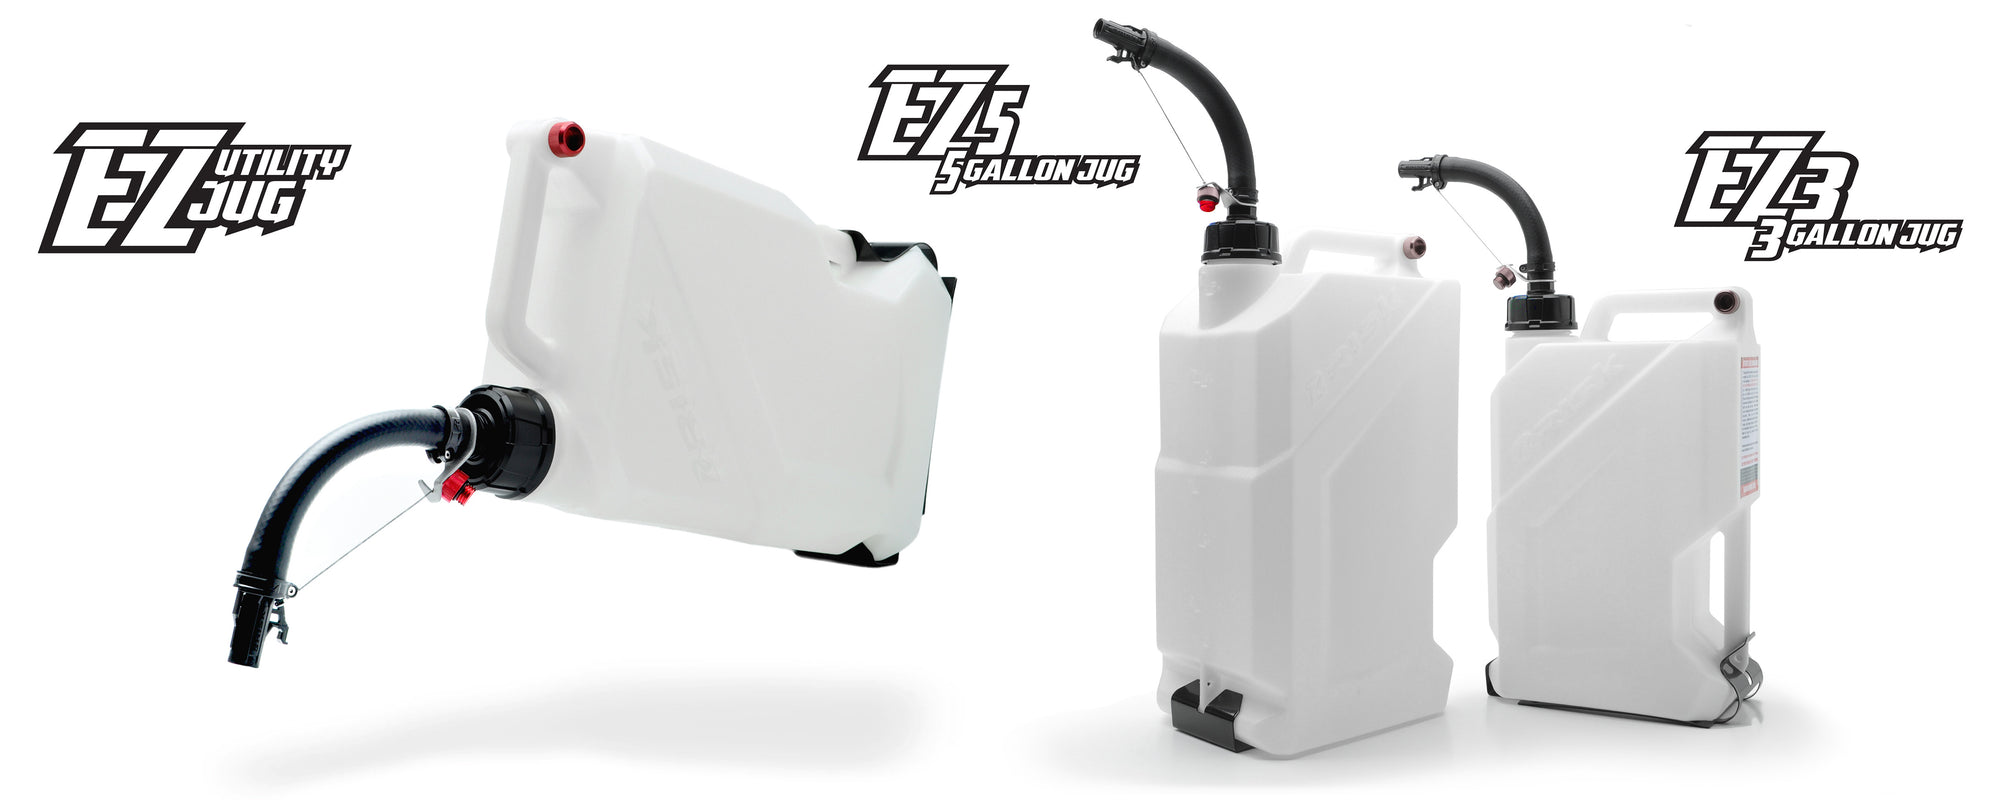 EZ Utility Jug Banner featuring both the EZ3 3 gallon and the EZ5 5 gallon utility jugs shown with the black hose bender and EZ floor mounts installed.